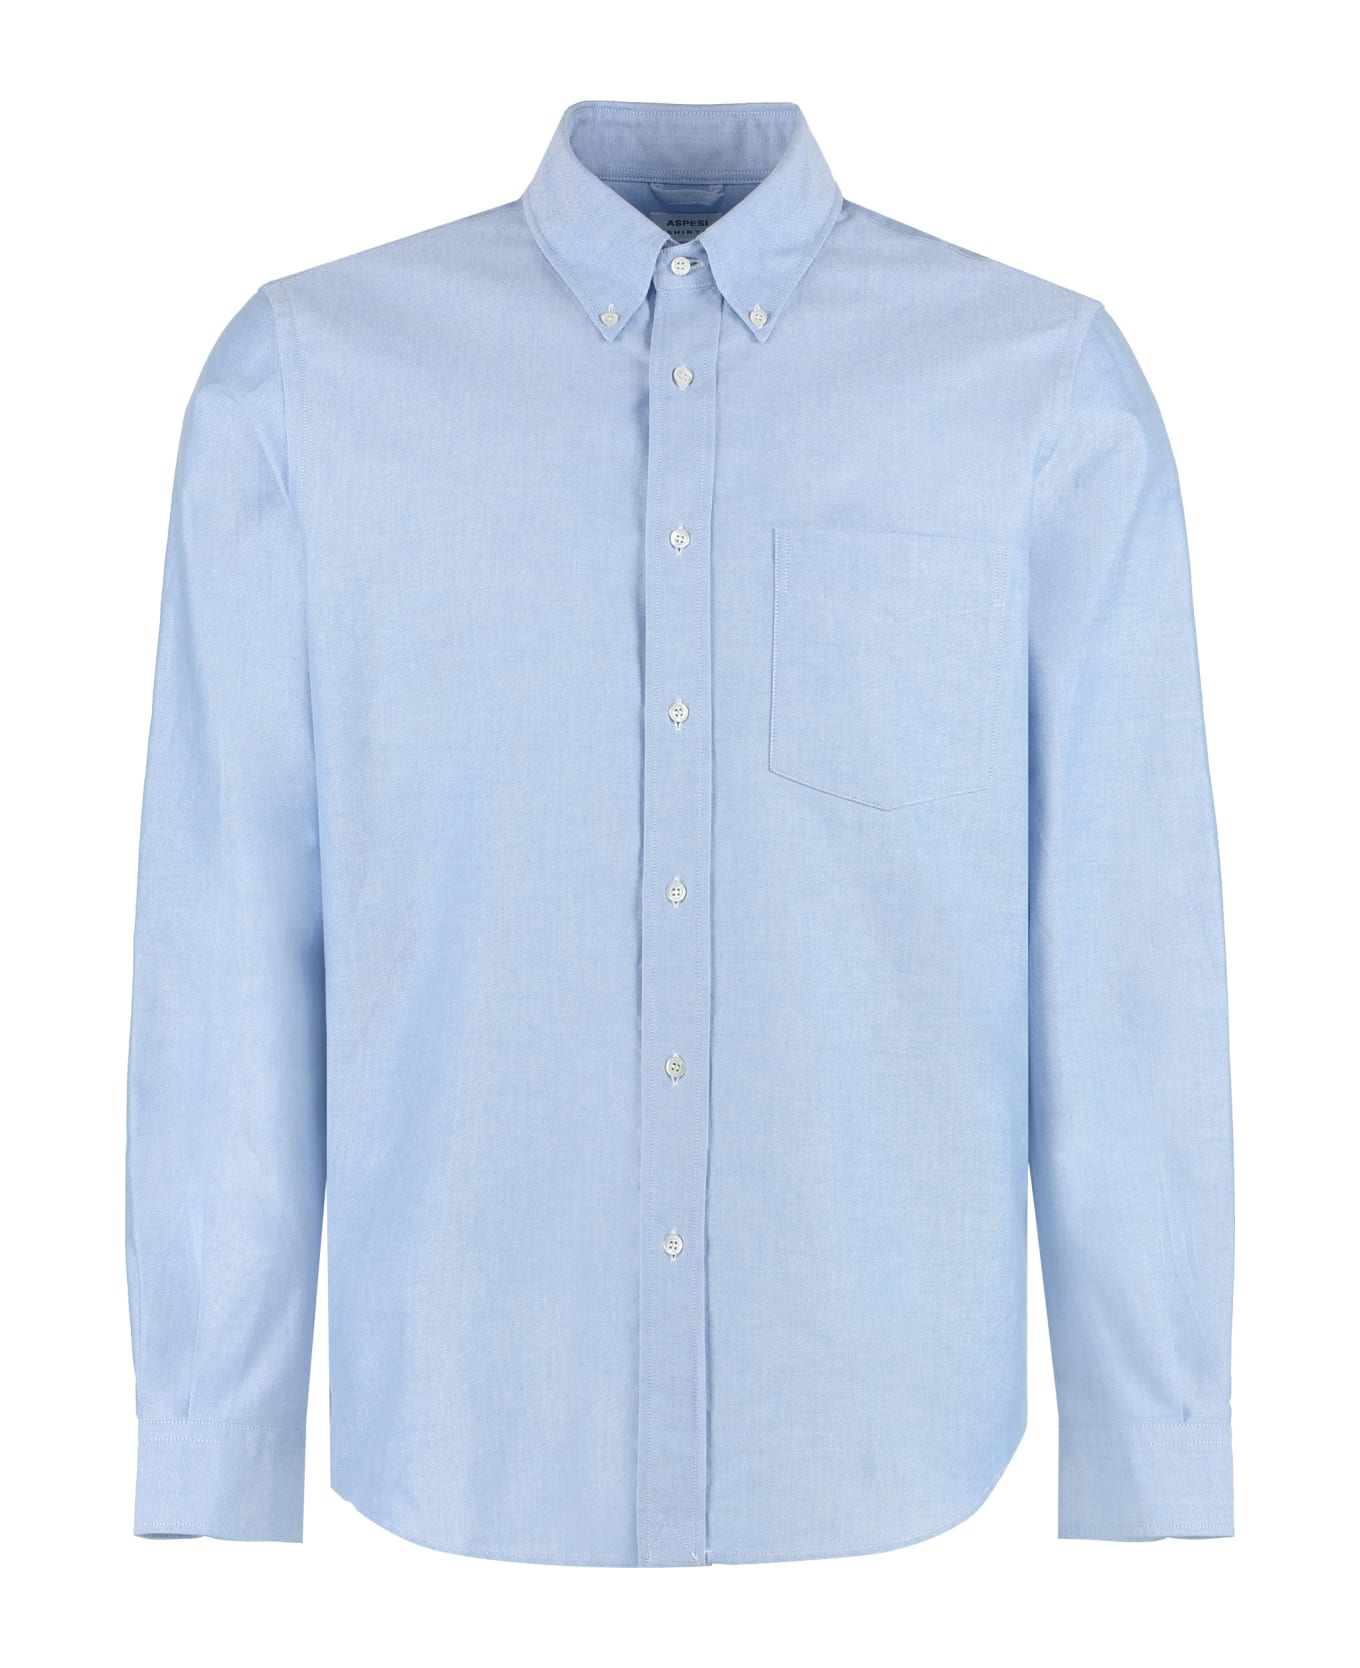 Aspesi Cotton Poplin Shirt - Light Blue シャツ